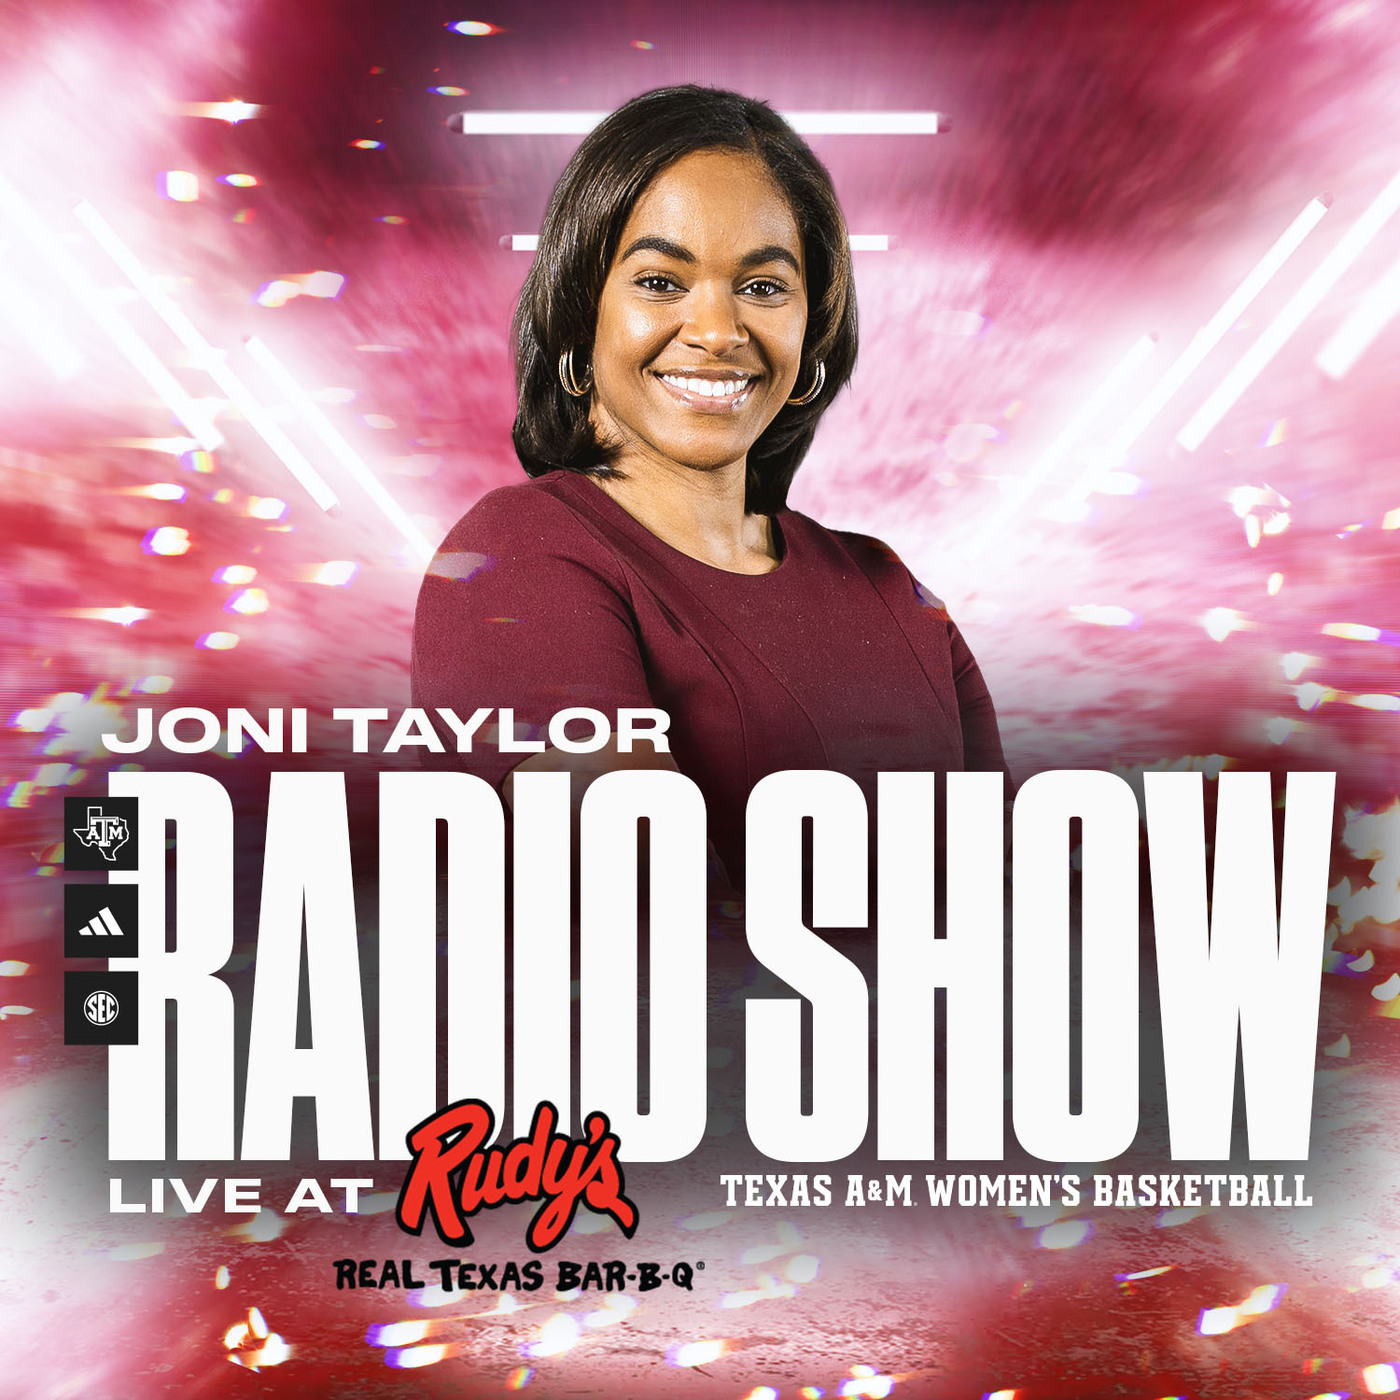 The Joni Taylor Radio Show